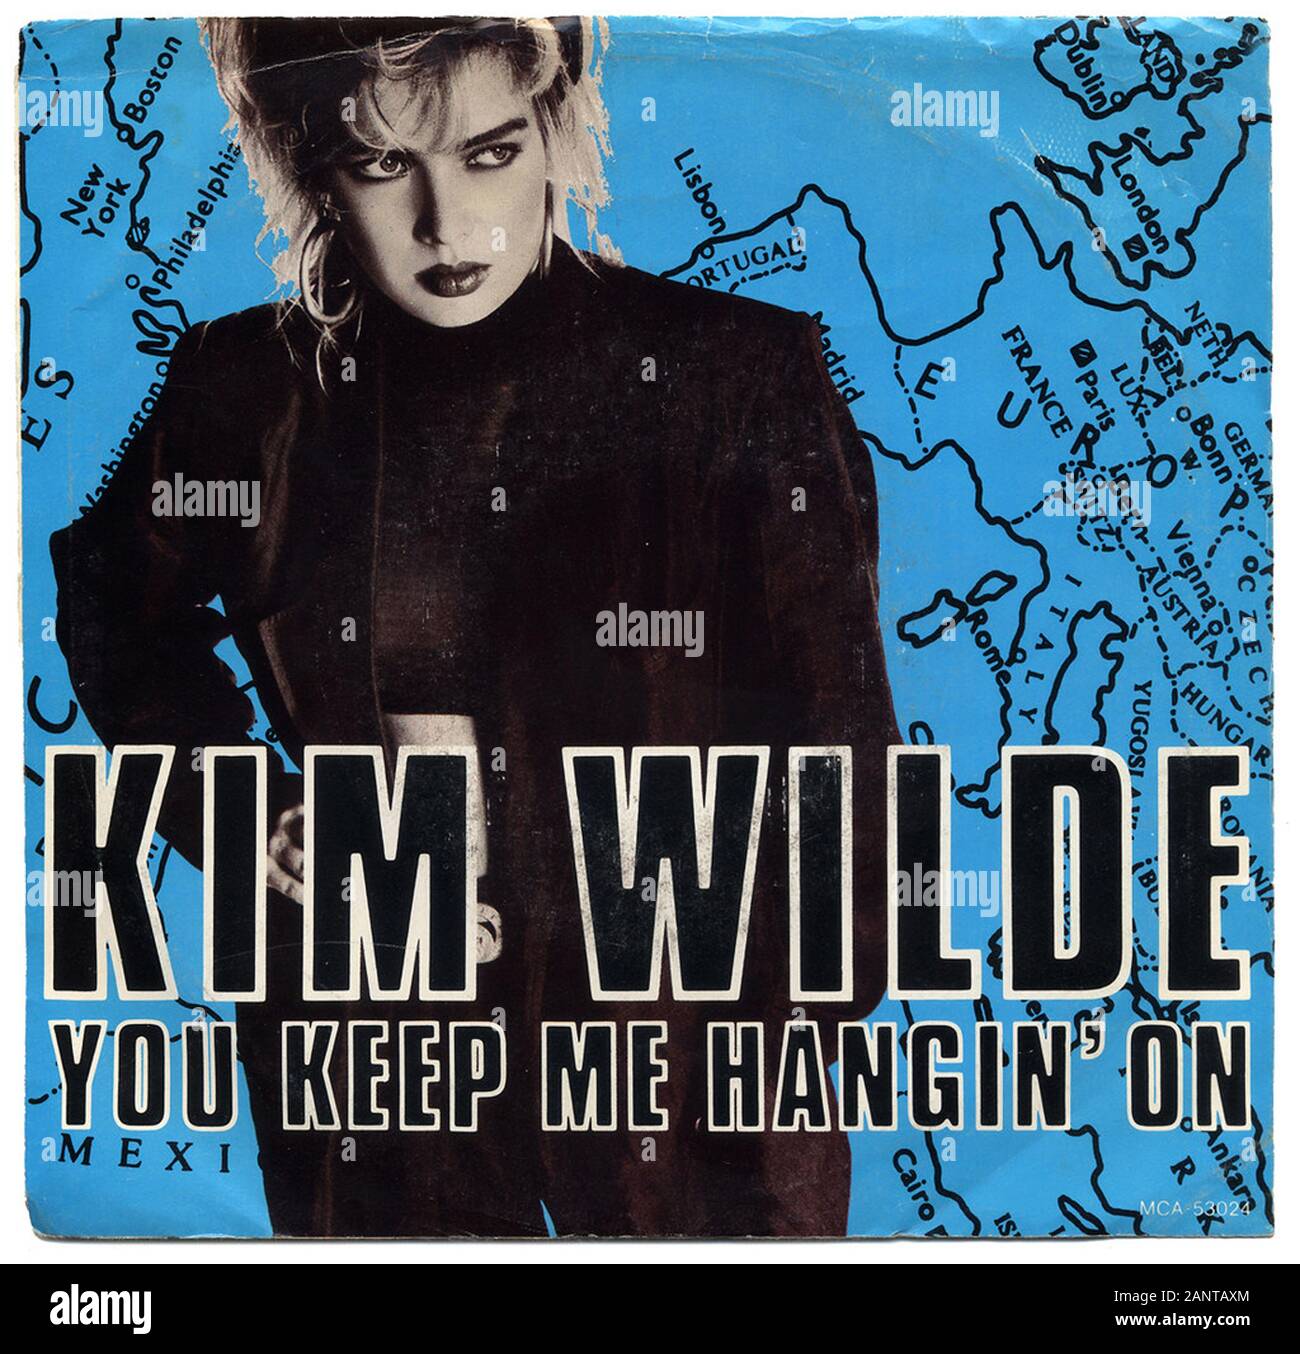 Kim Wilde - You Keep Me Hangin' On - Classic vintage vinyl album Stock  Photo - Alamy